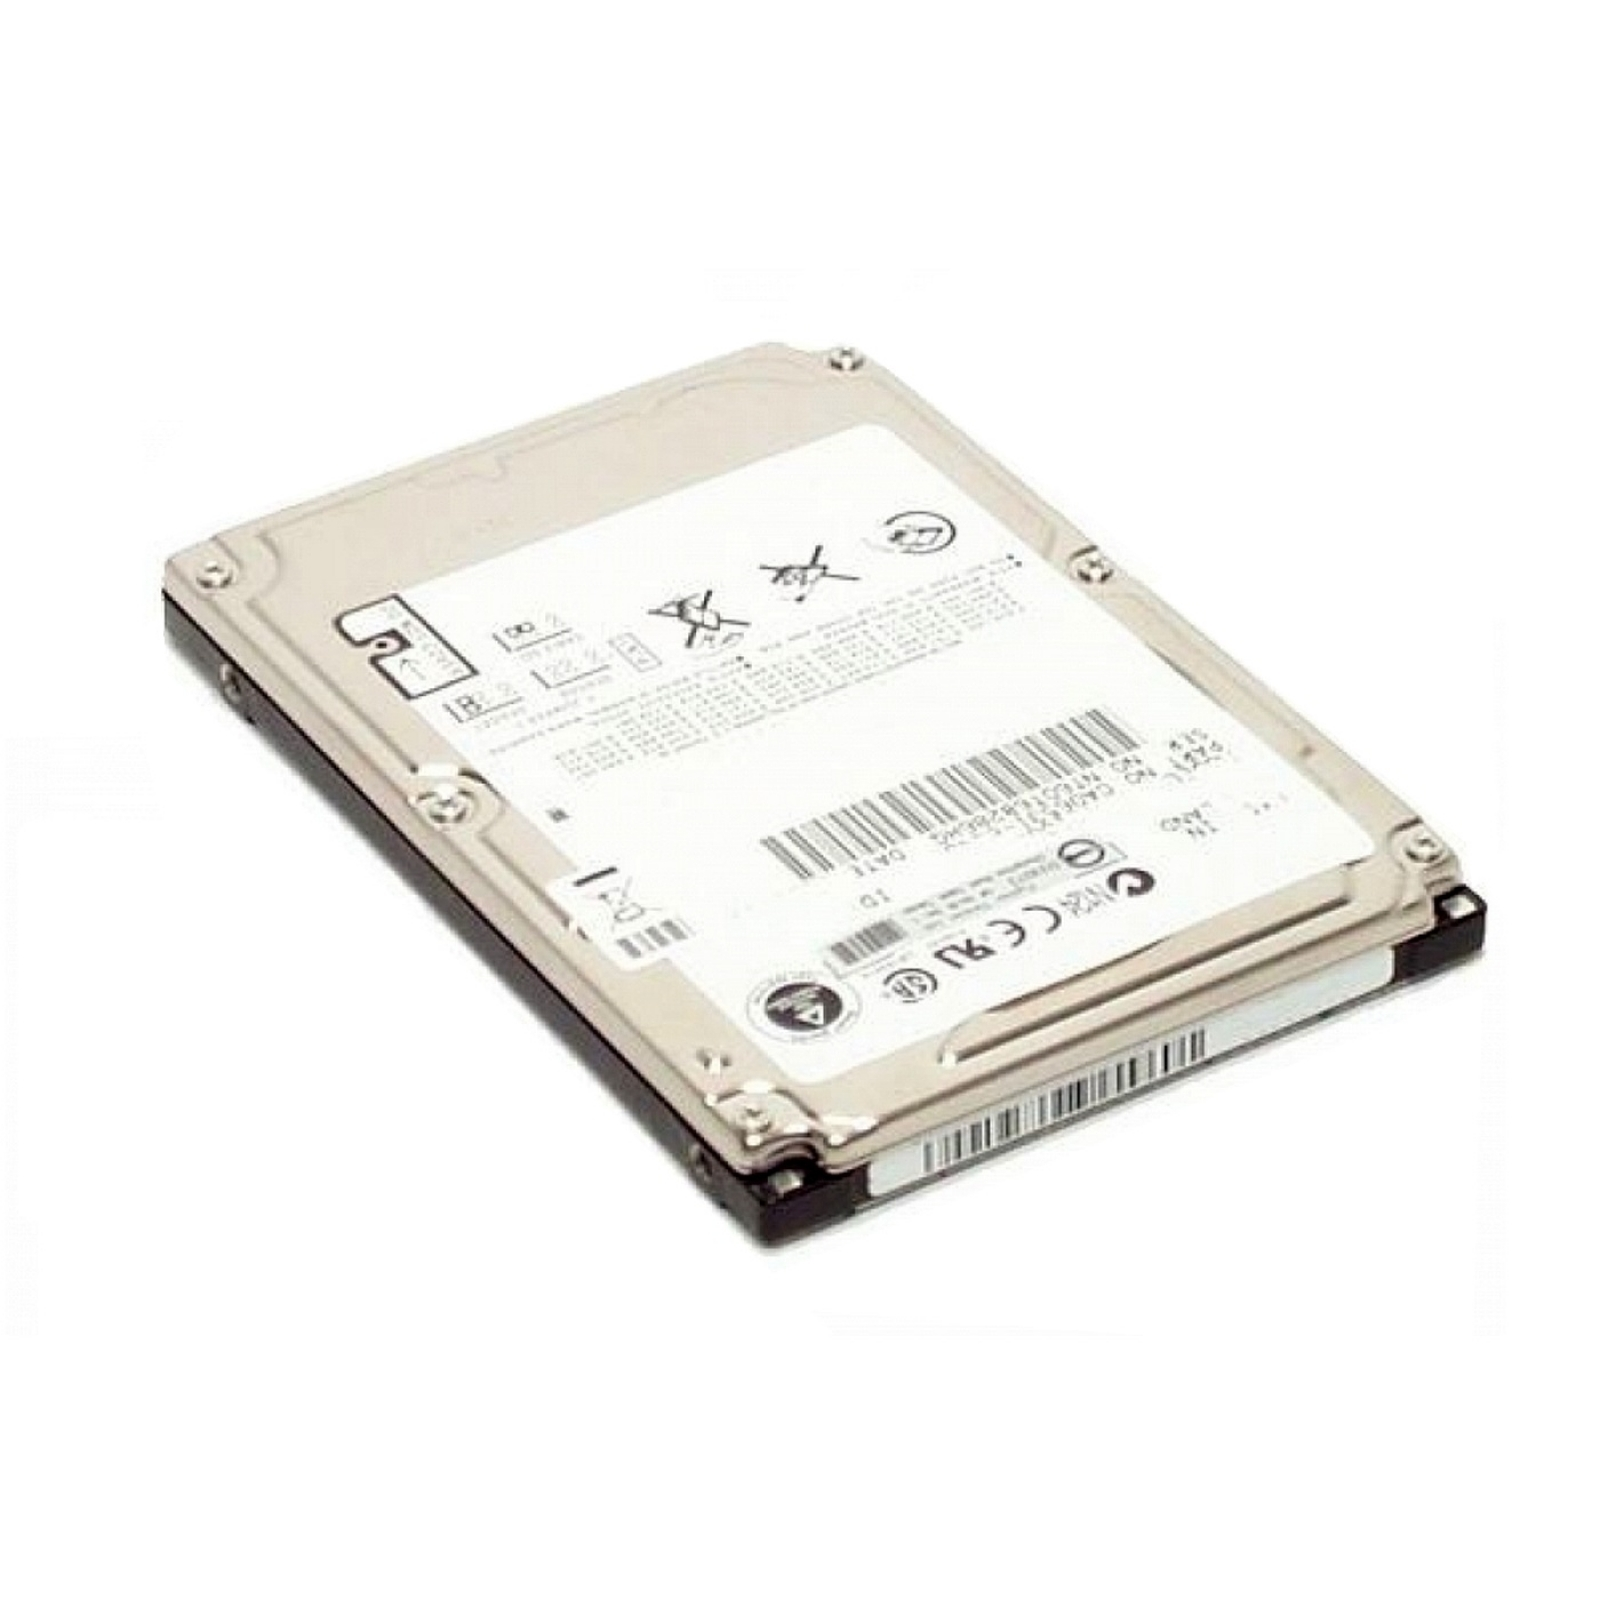 (9451), 1 Festplatte Z61m 1TB, ThinkPad 7mm, SEAGATE HDD, 128MB LENOVO für intern TB, 7200rpm,